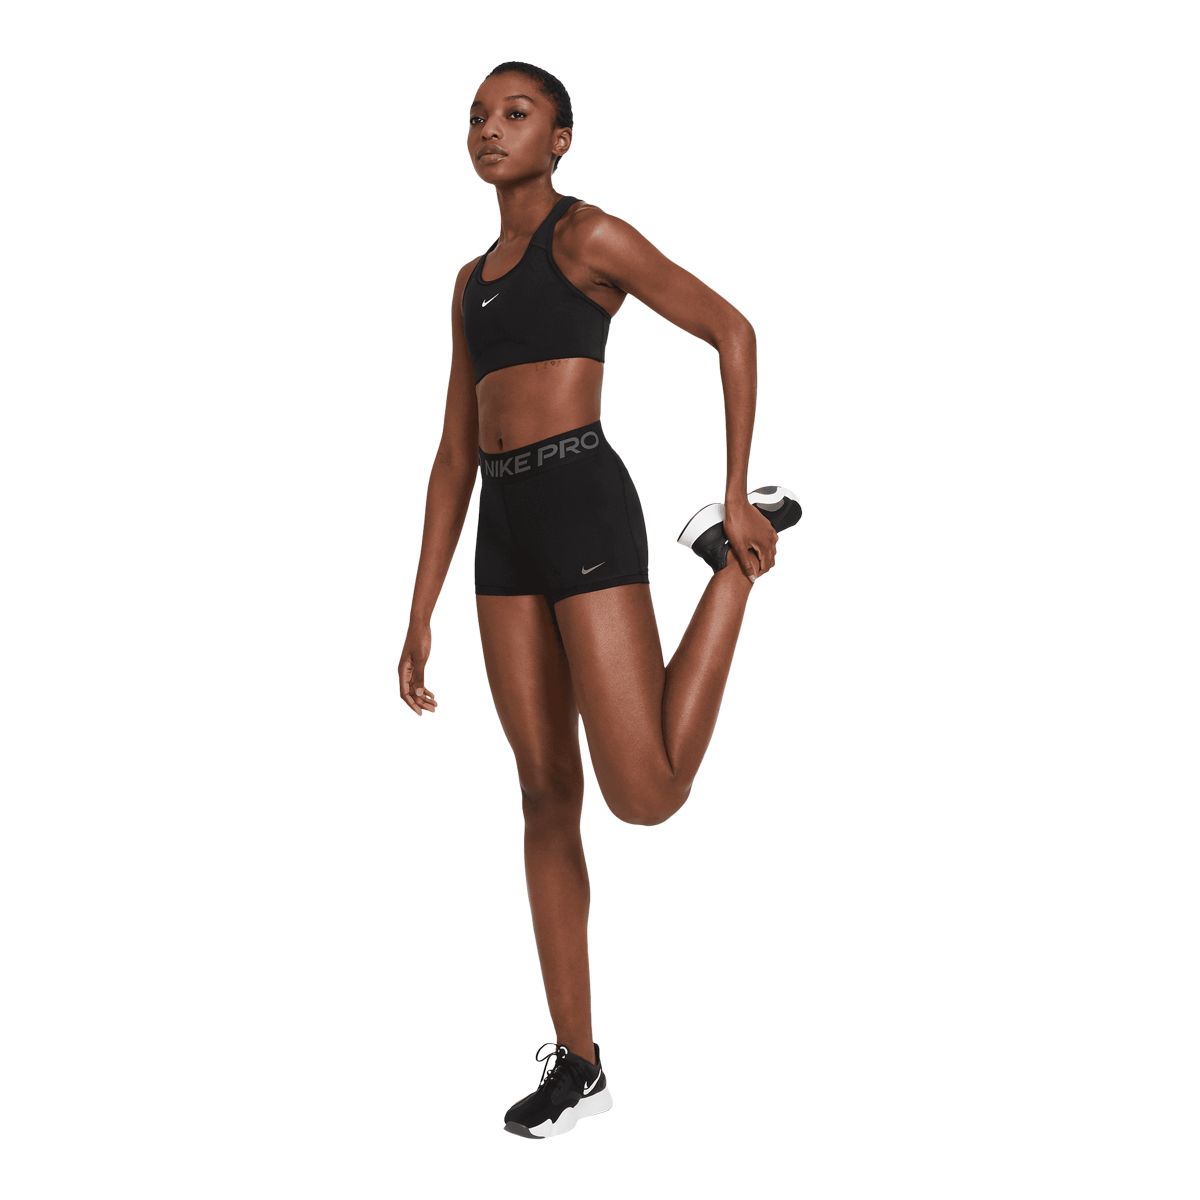 Nike Training Pro Dri-FIT 365 3-Inch legging shorts in Turquoise Blue XL